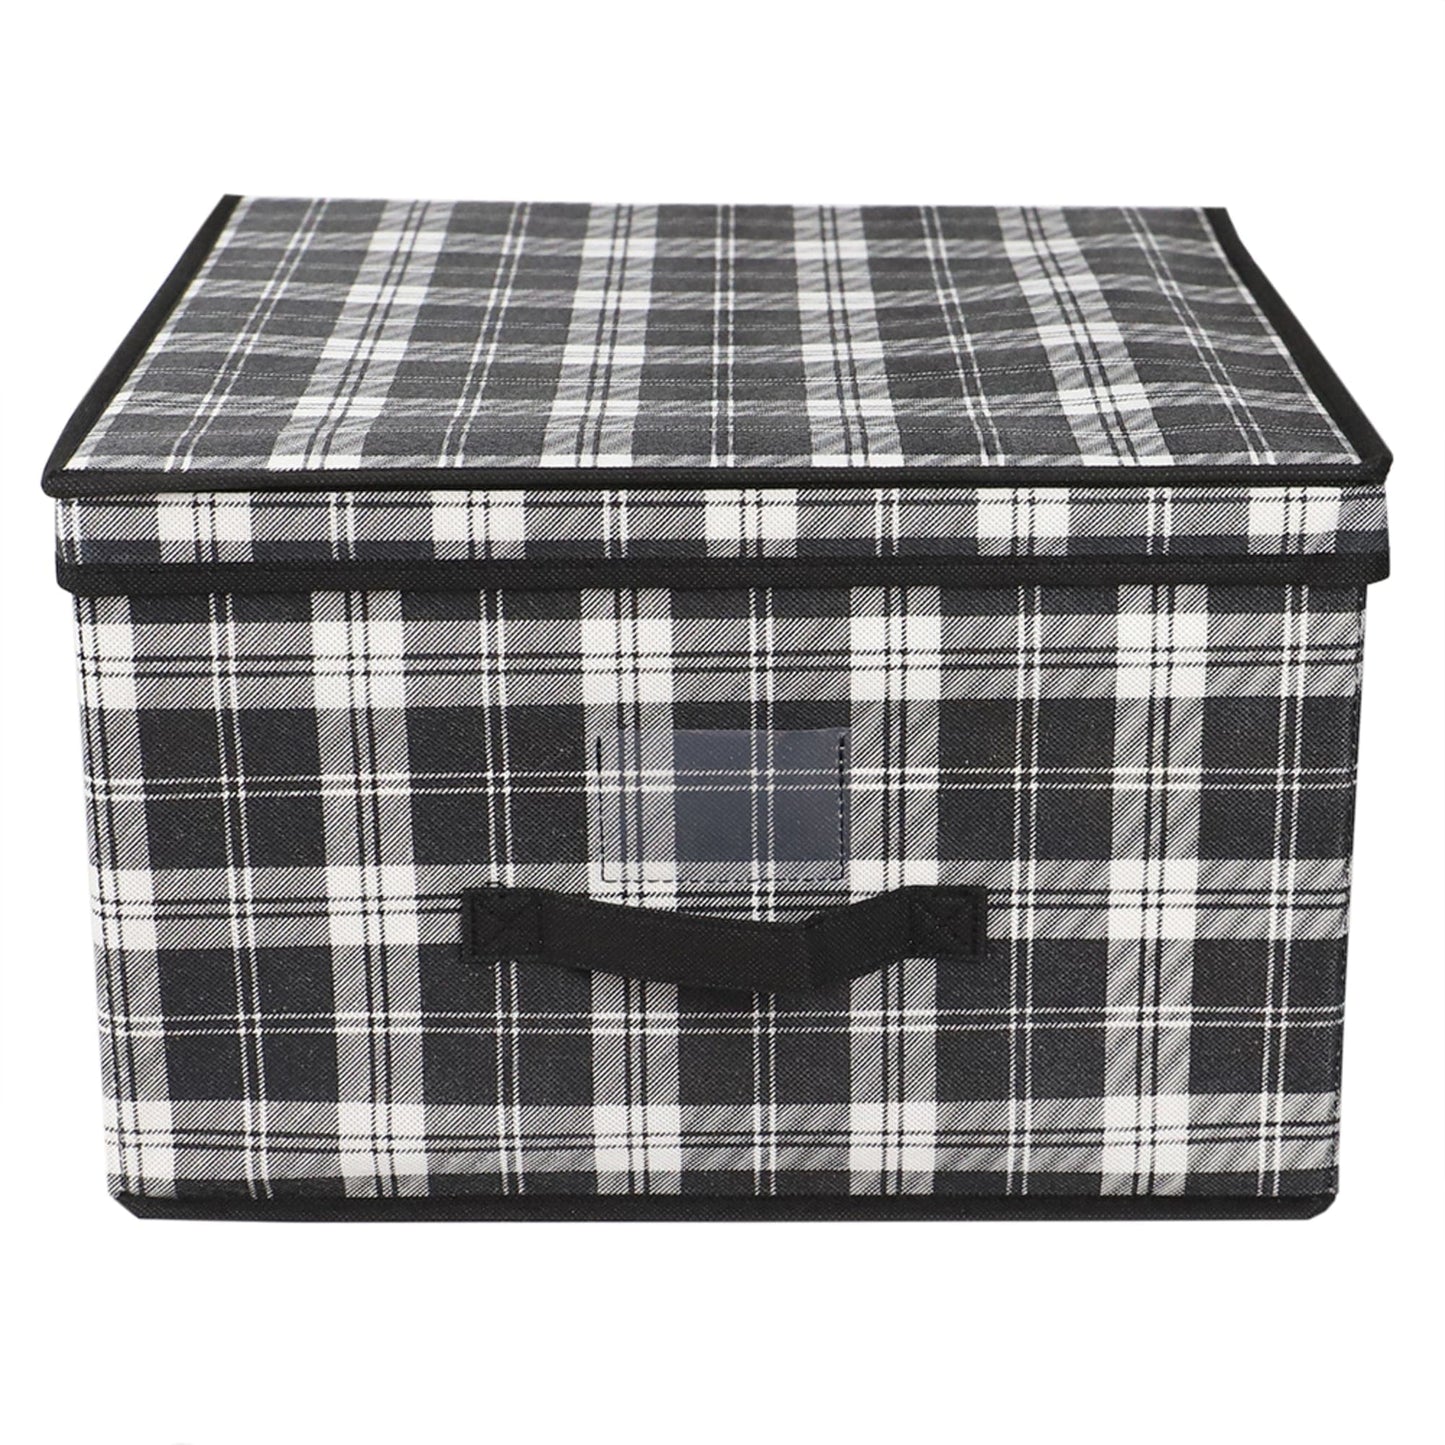 Plaid Non-Woven Jumbo Storage Box with Label Window, Black